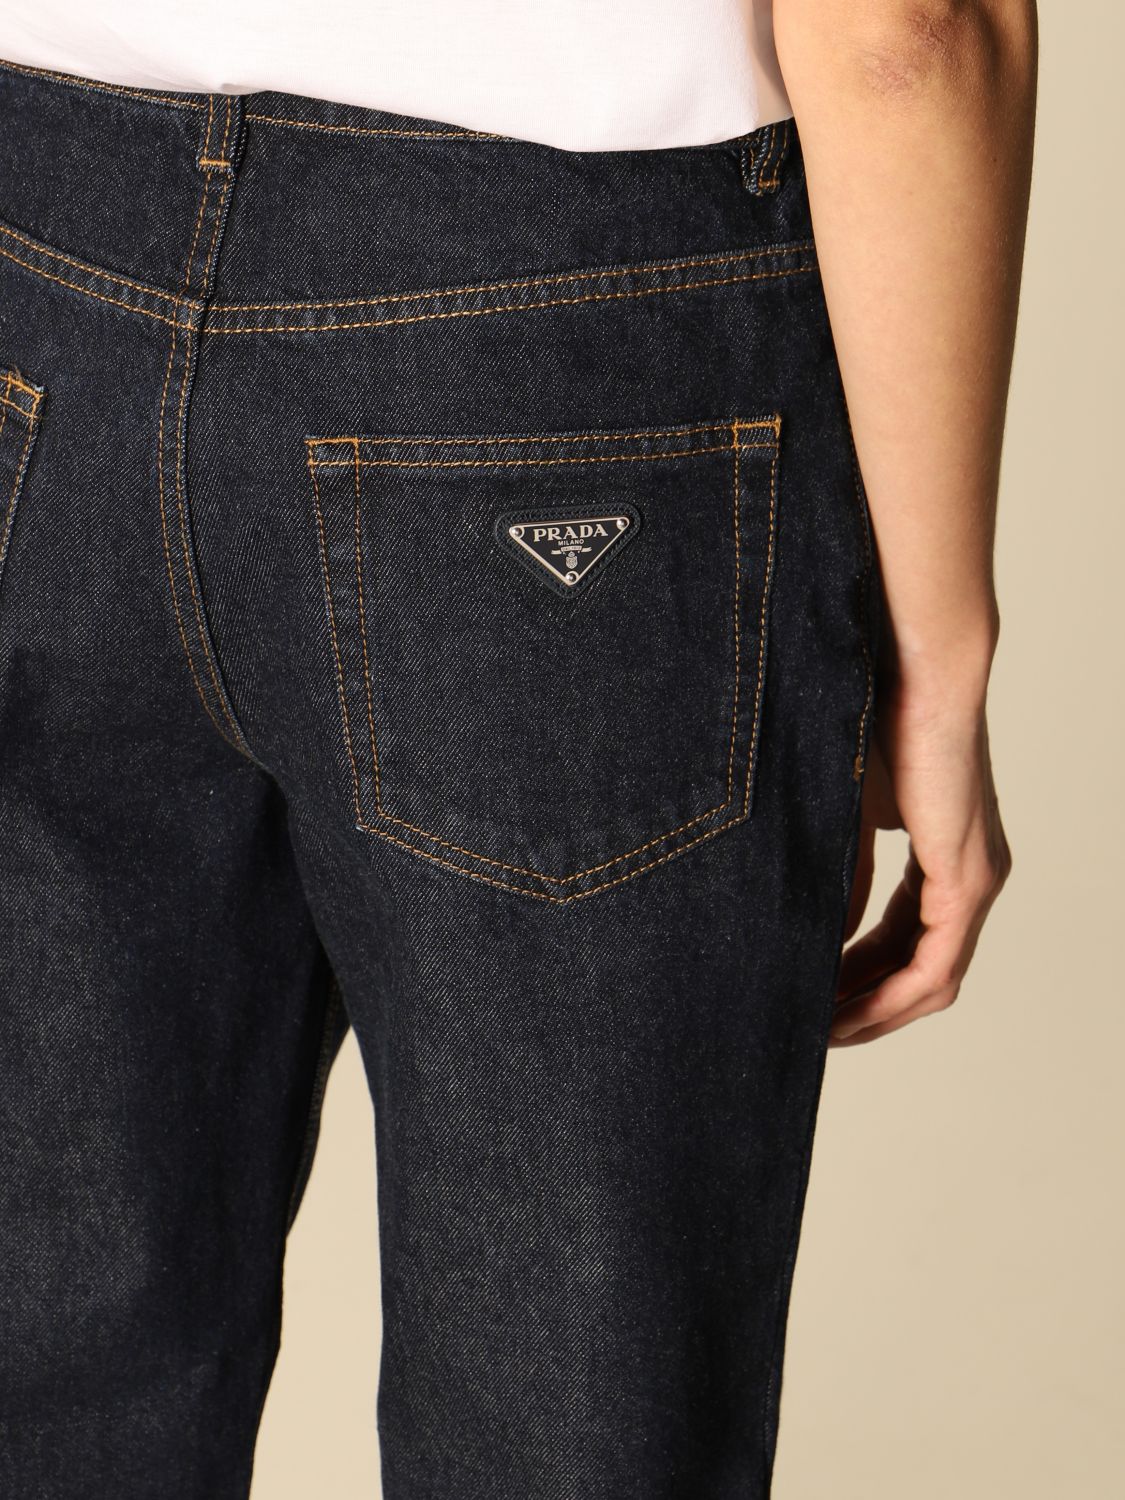 PRADA: cropped jeans with triangular logo - Blue | Prada jeans GFP459 1XUT  online on 